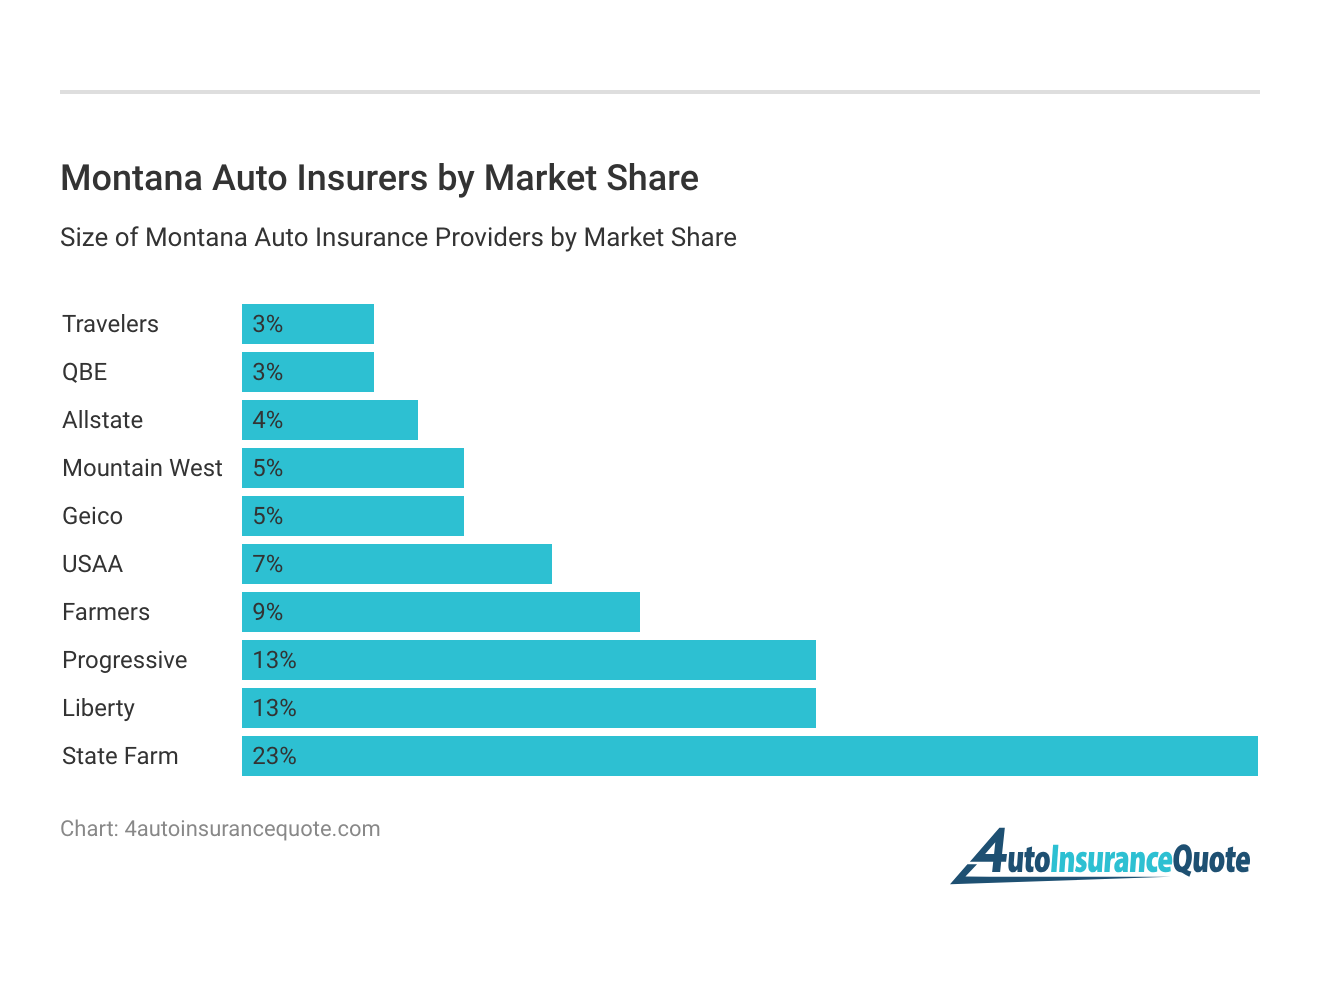 <h3>Montana Auto Insurers by Market Share</h3>